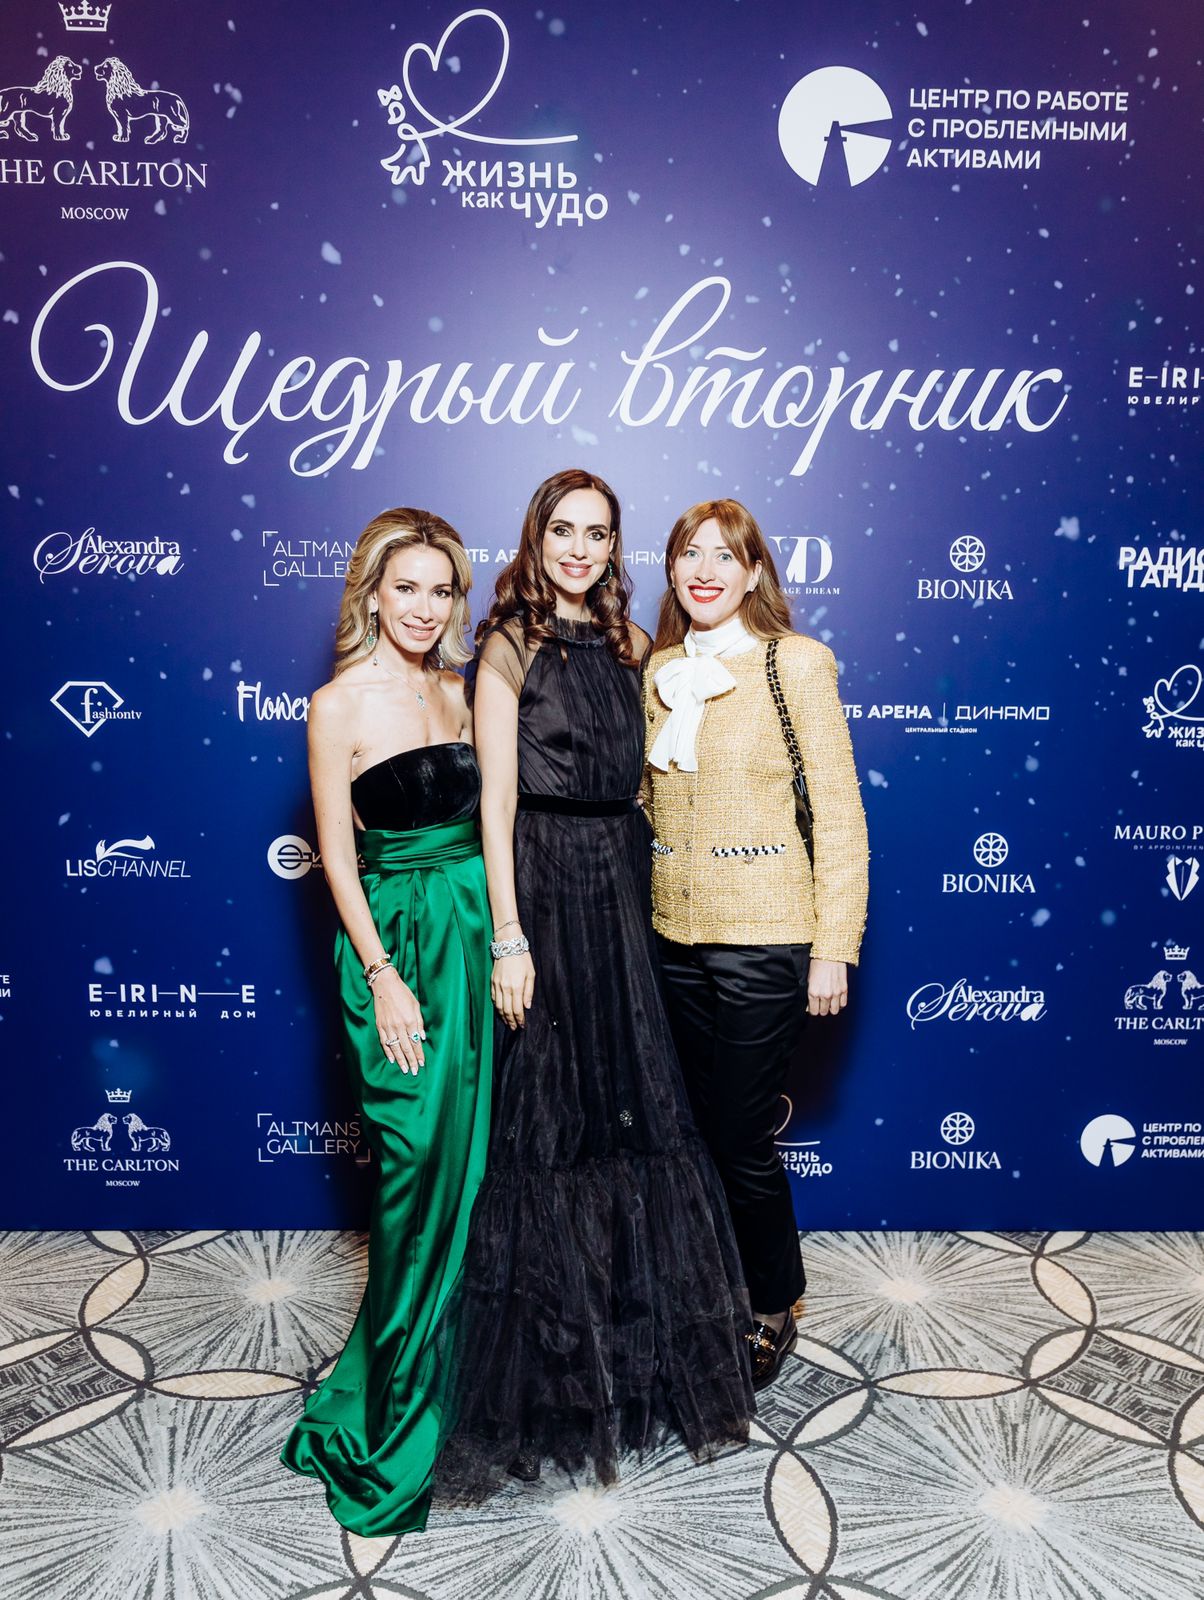 На фото: попечители фонда Юлианна Винер и Алина Ковалева, а также управляющий партнер Центра по работе с проблемными активами Зоя Галеева».